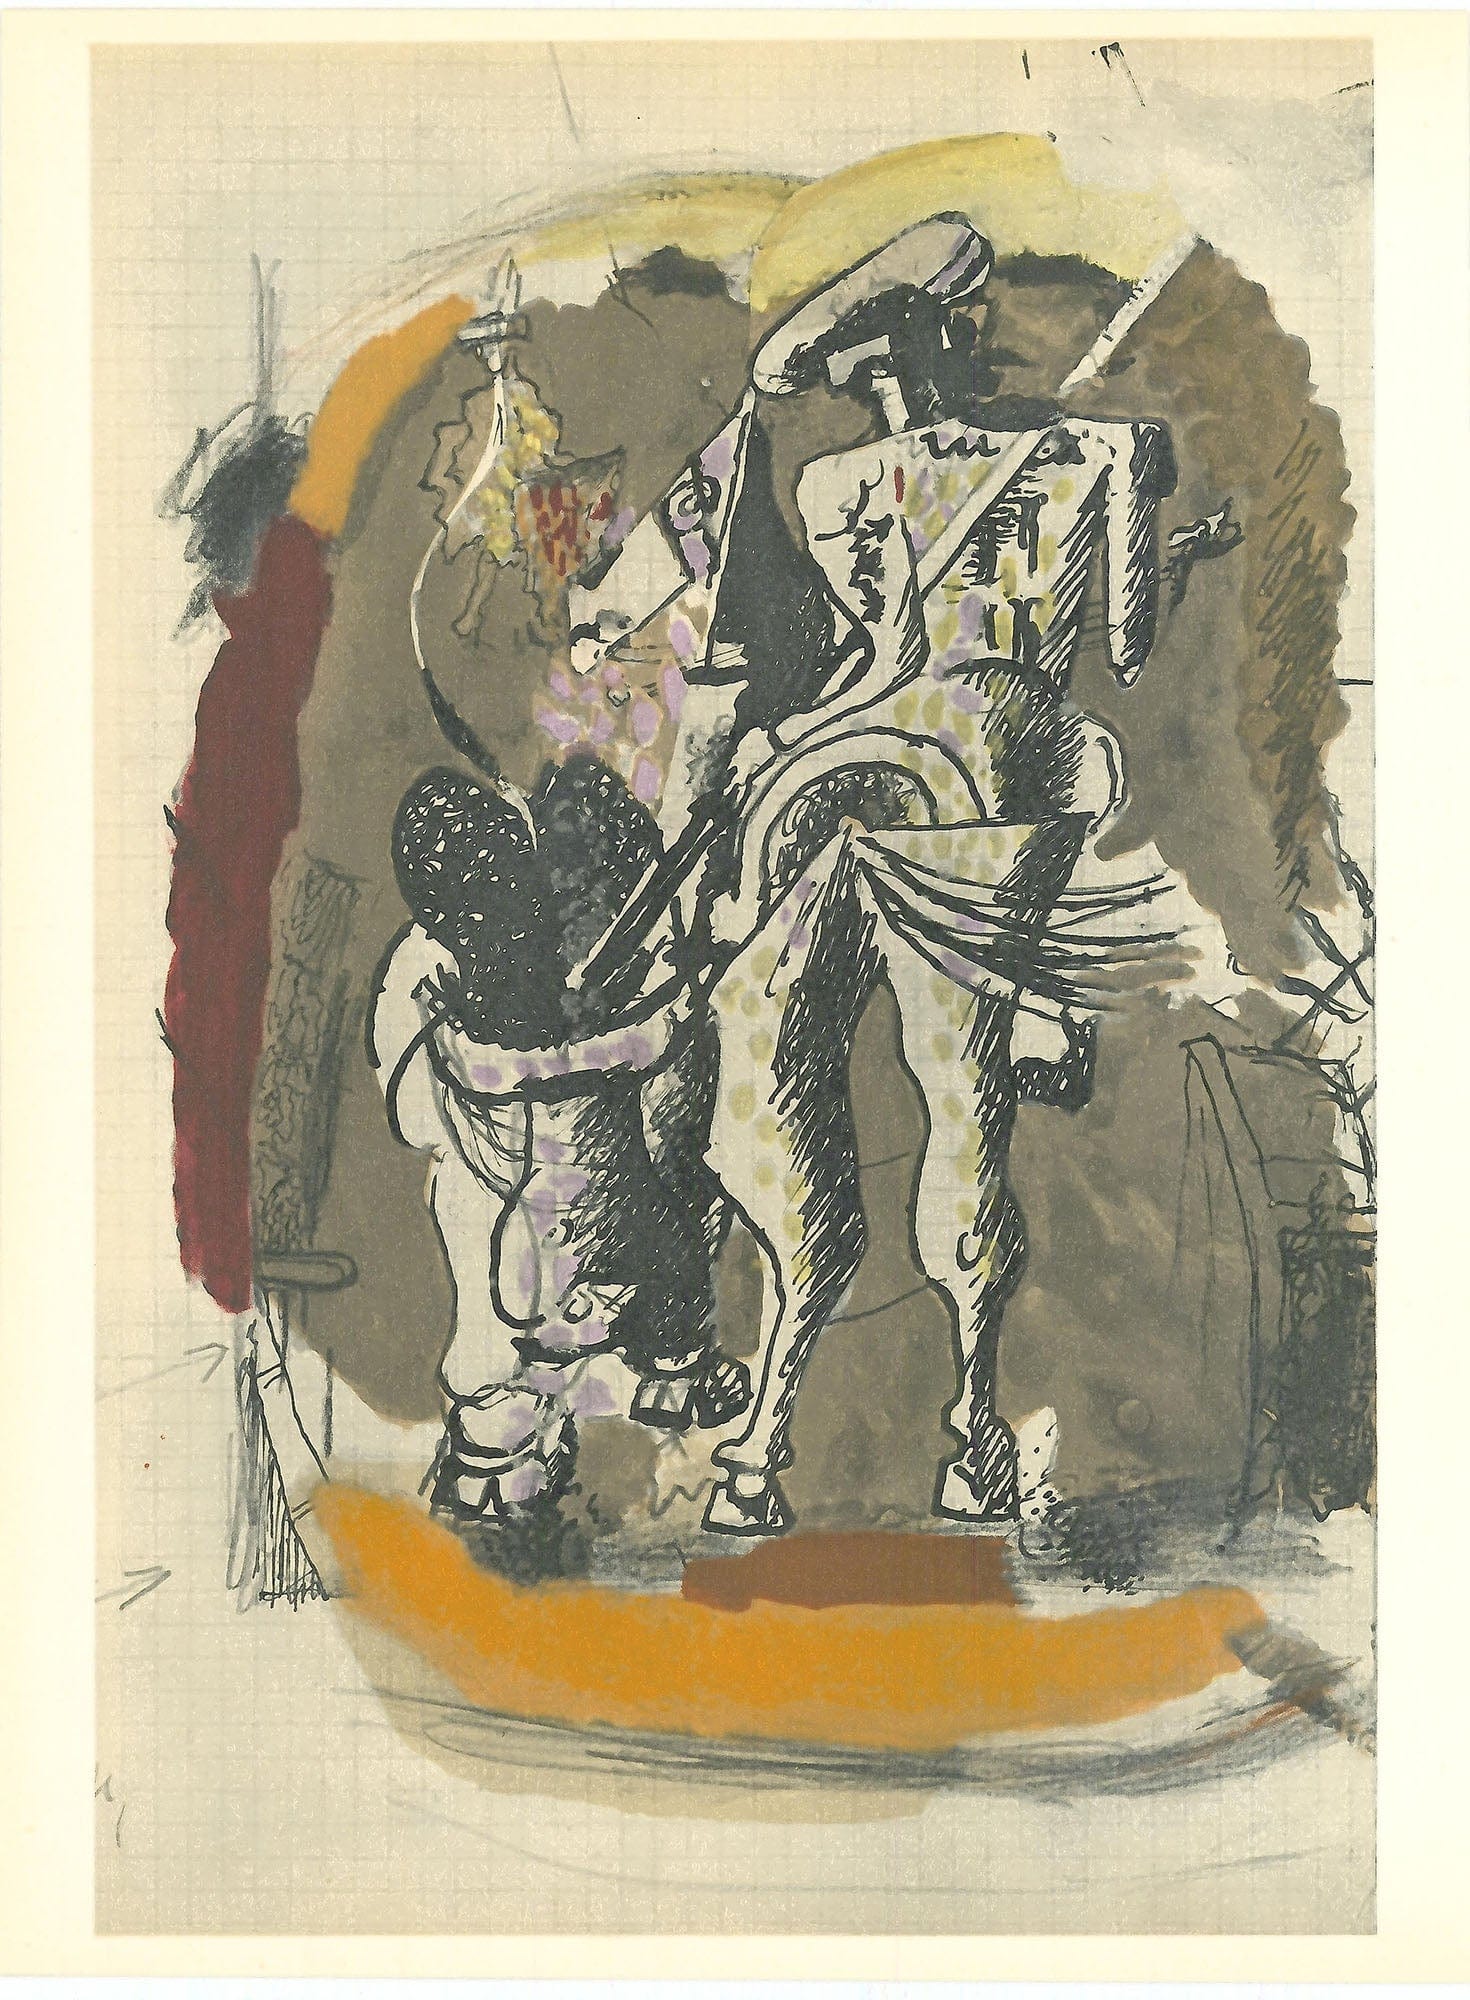 Georges Braque, "Untitled V" ZOOM Vol. 8 No. 31 ET 32 verve lithograph